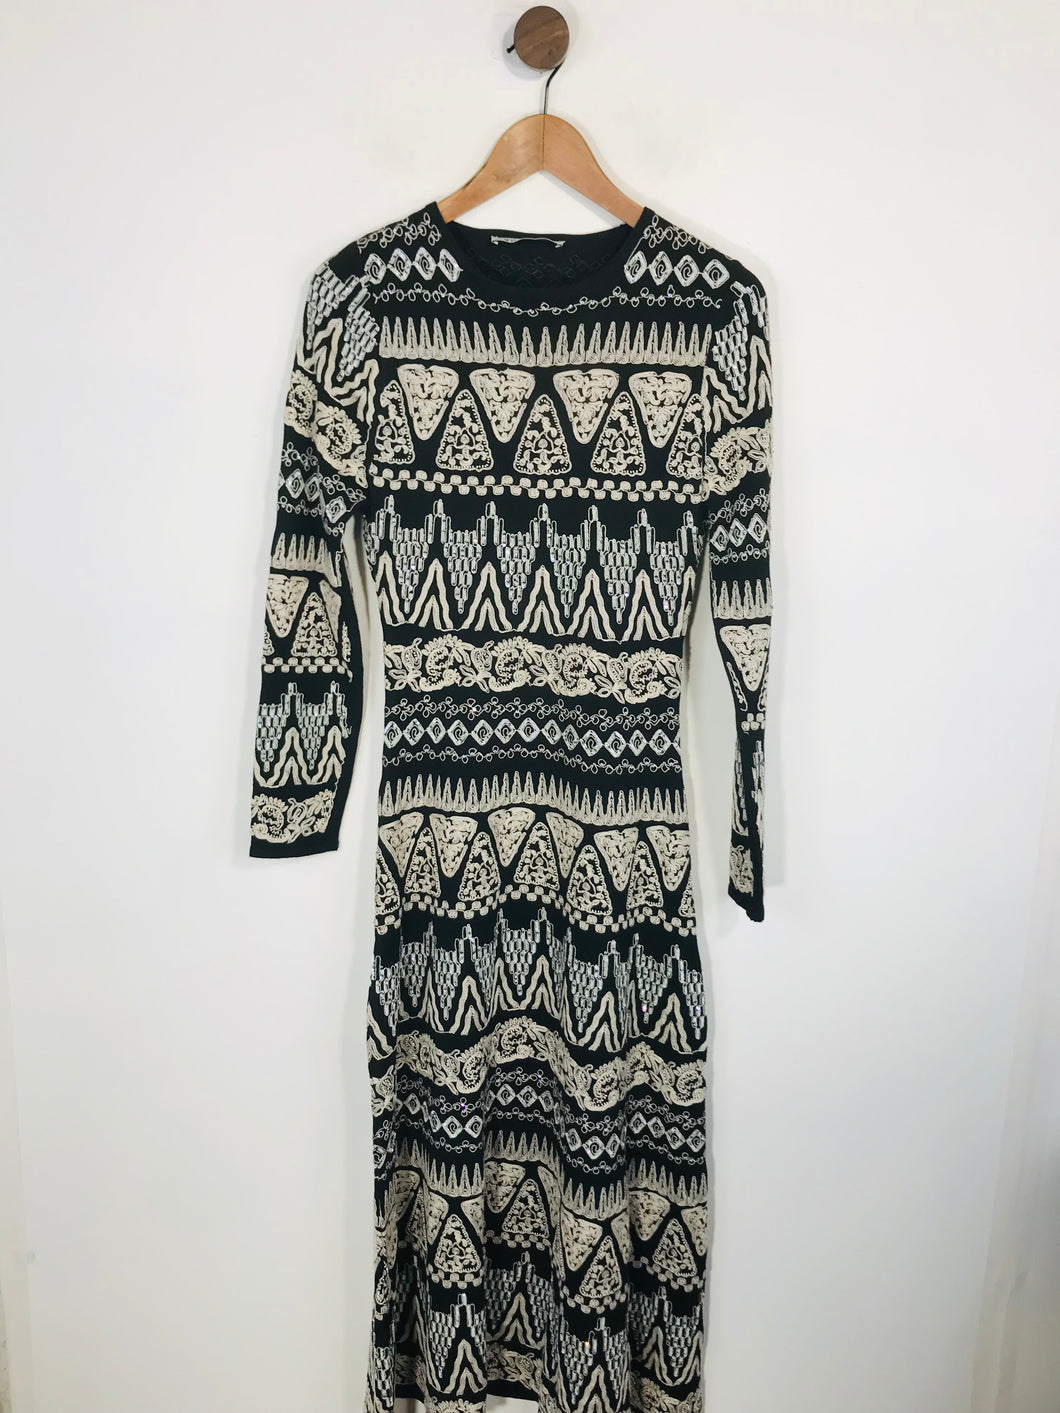 Zara Women's Embroidered Sequin A-Line Maxi Dress | M UK10-12 | Black